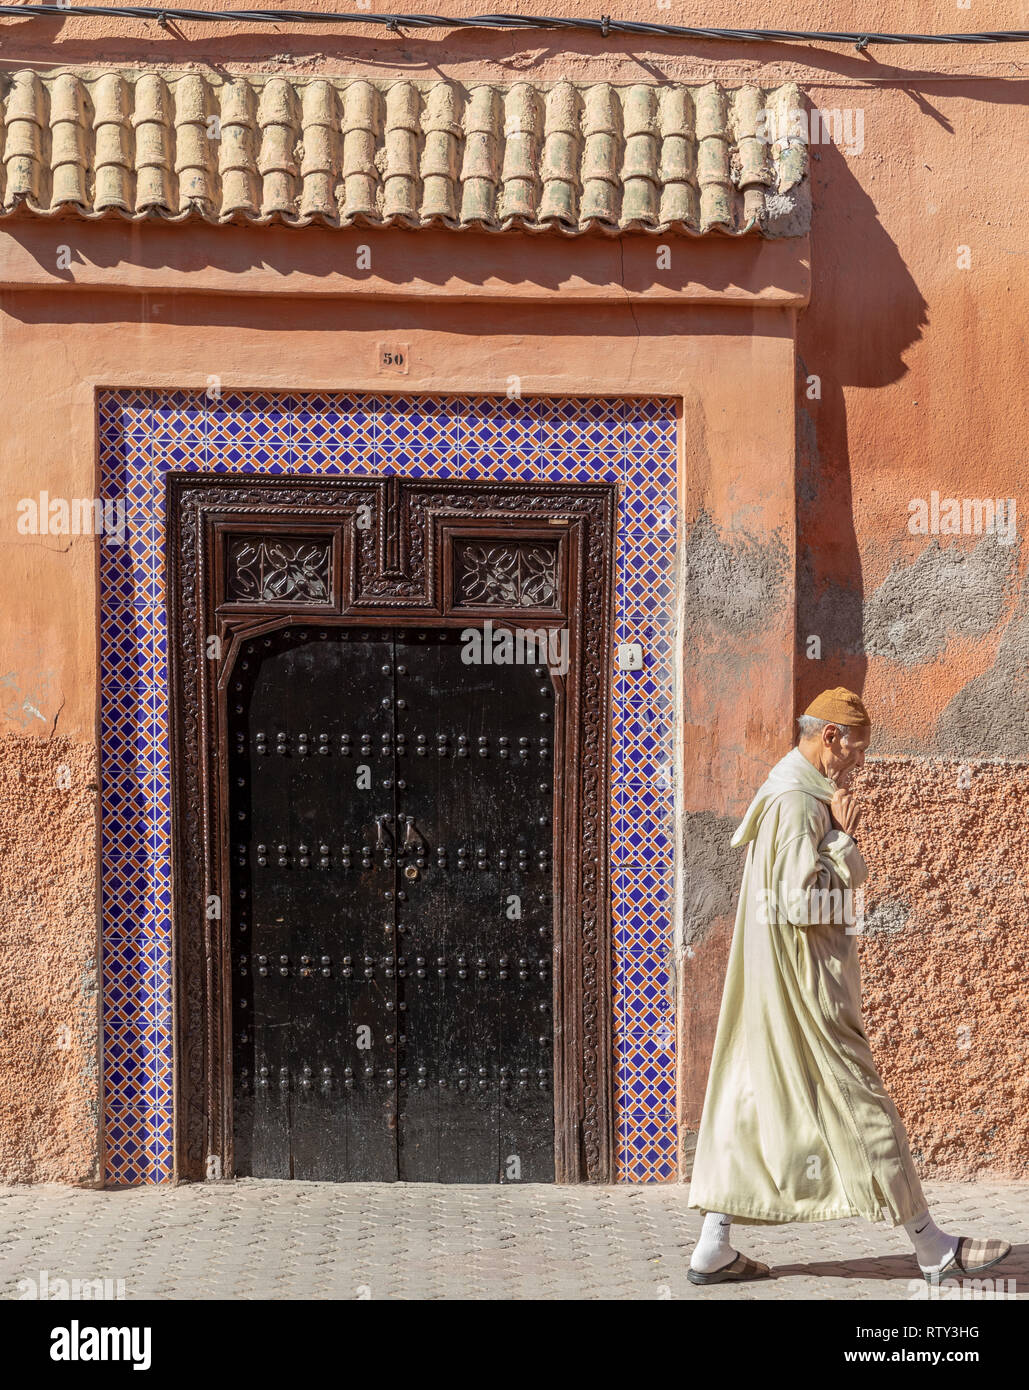 Elderly man in djellaba walking in the kasbah, Marrakesh Stock Photo